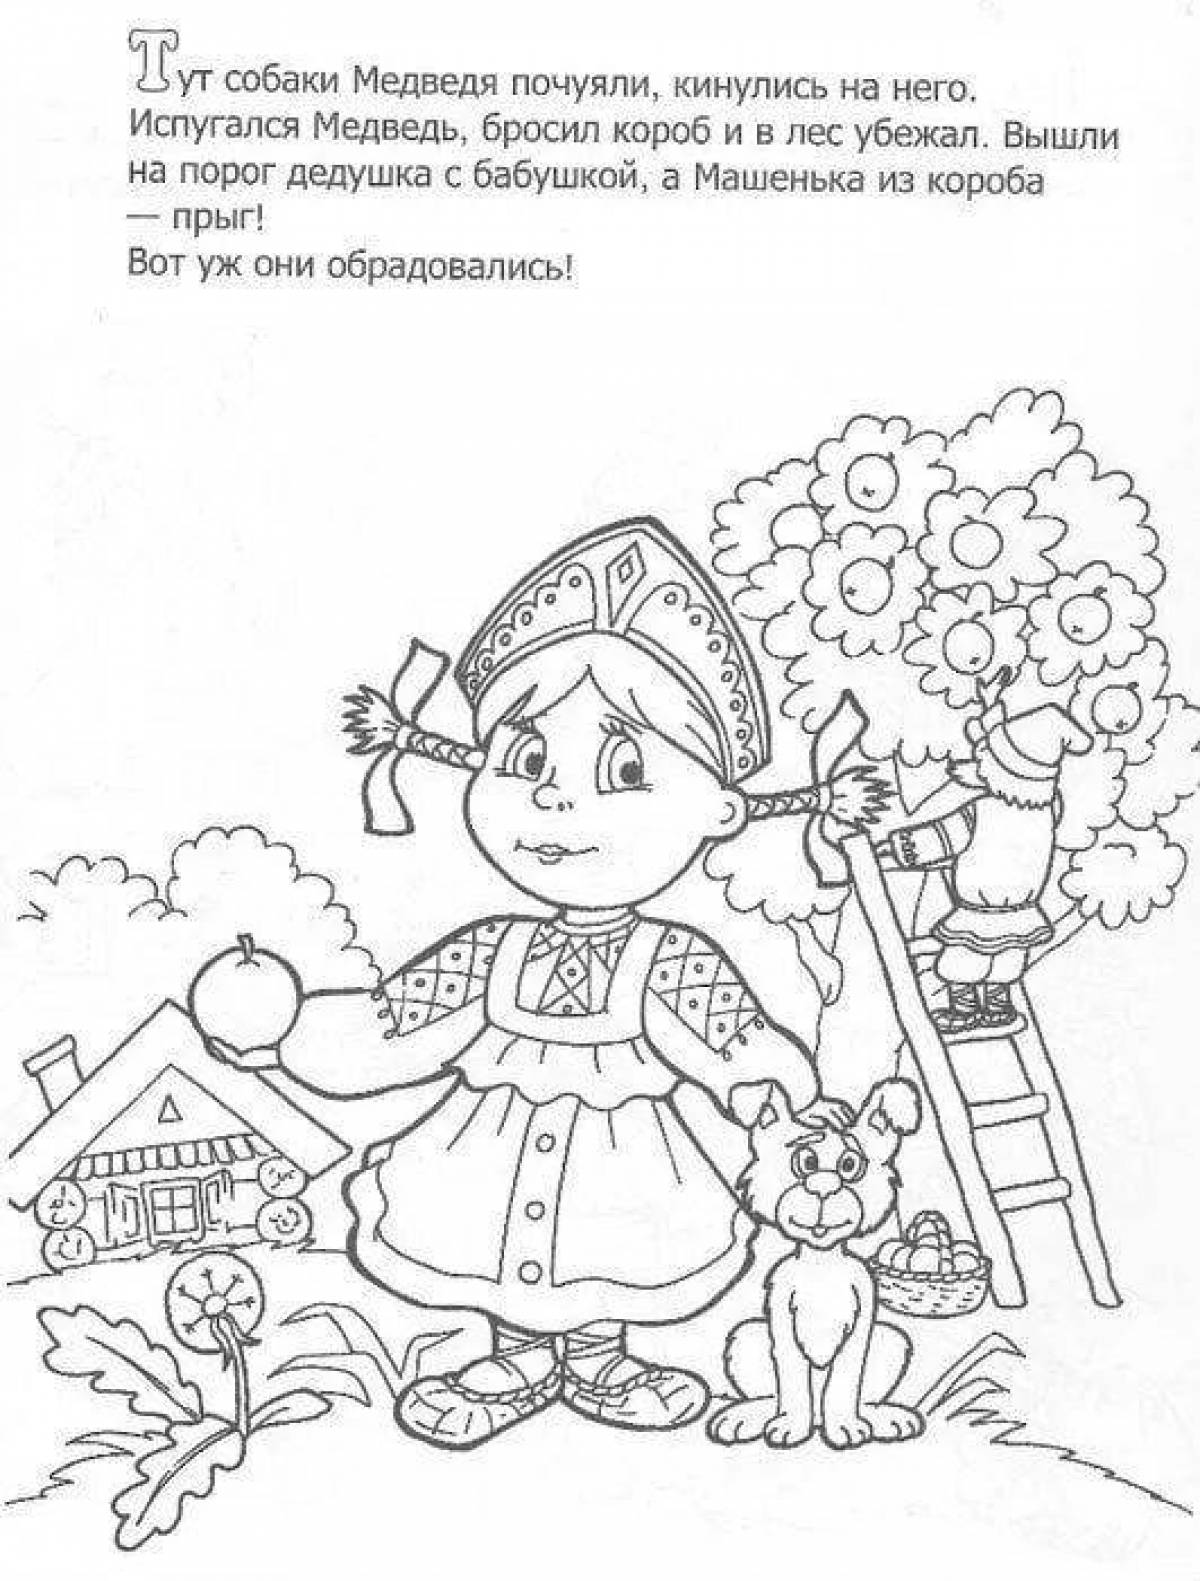 Masha and the bear inspirational coloring book